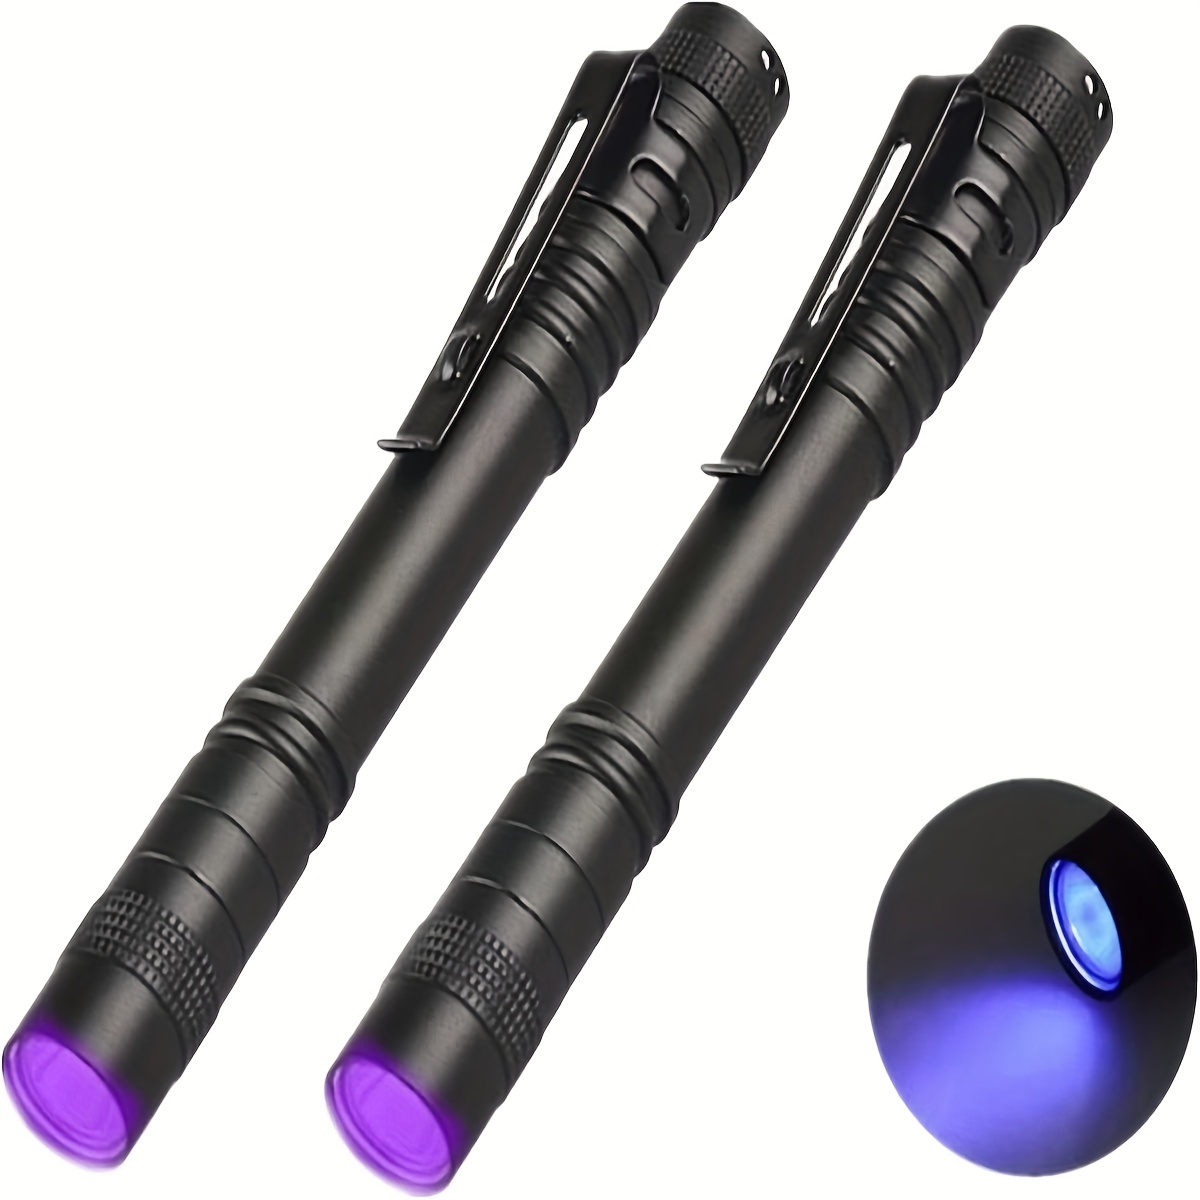 Consciot - Linterna UV de luz negra, 12 LED de 395 nm, luz negra  ultravioleta, mini linterna portátil, detector de orina de mascotas para  orina de